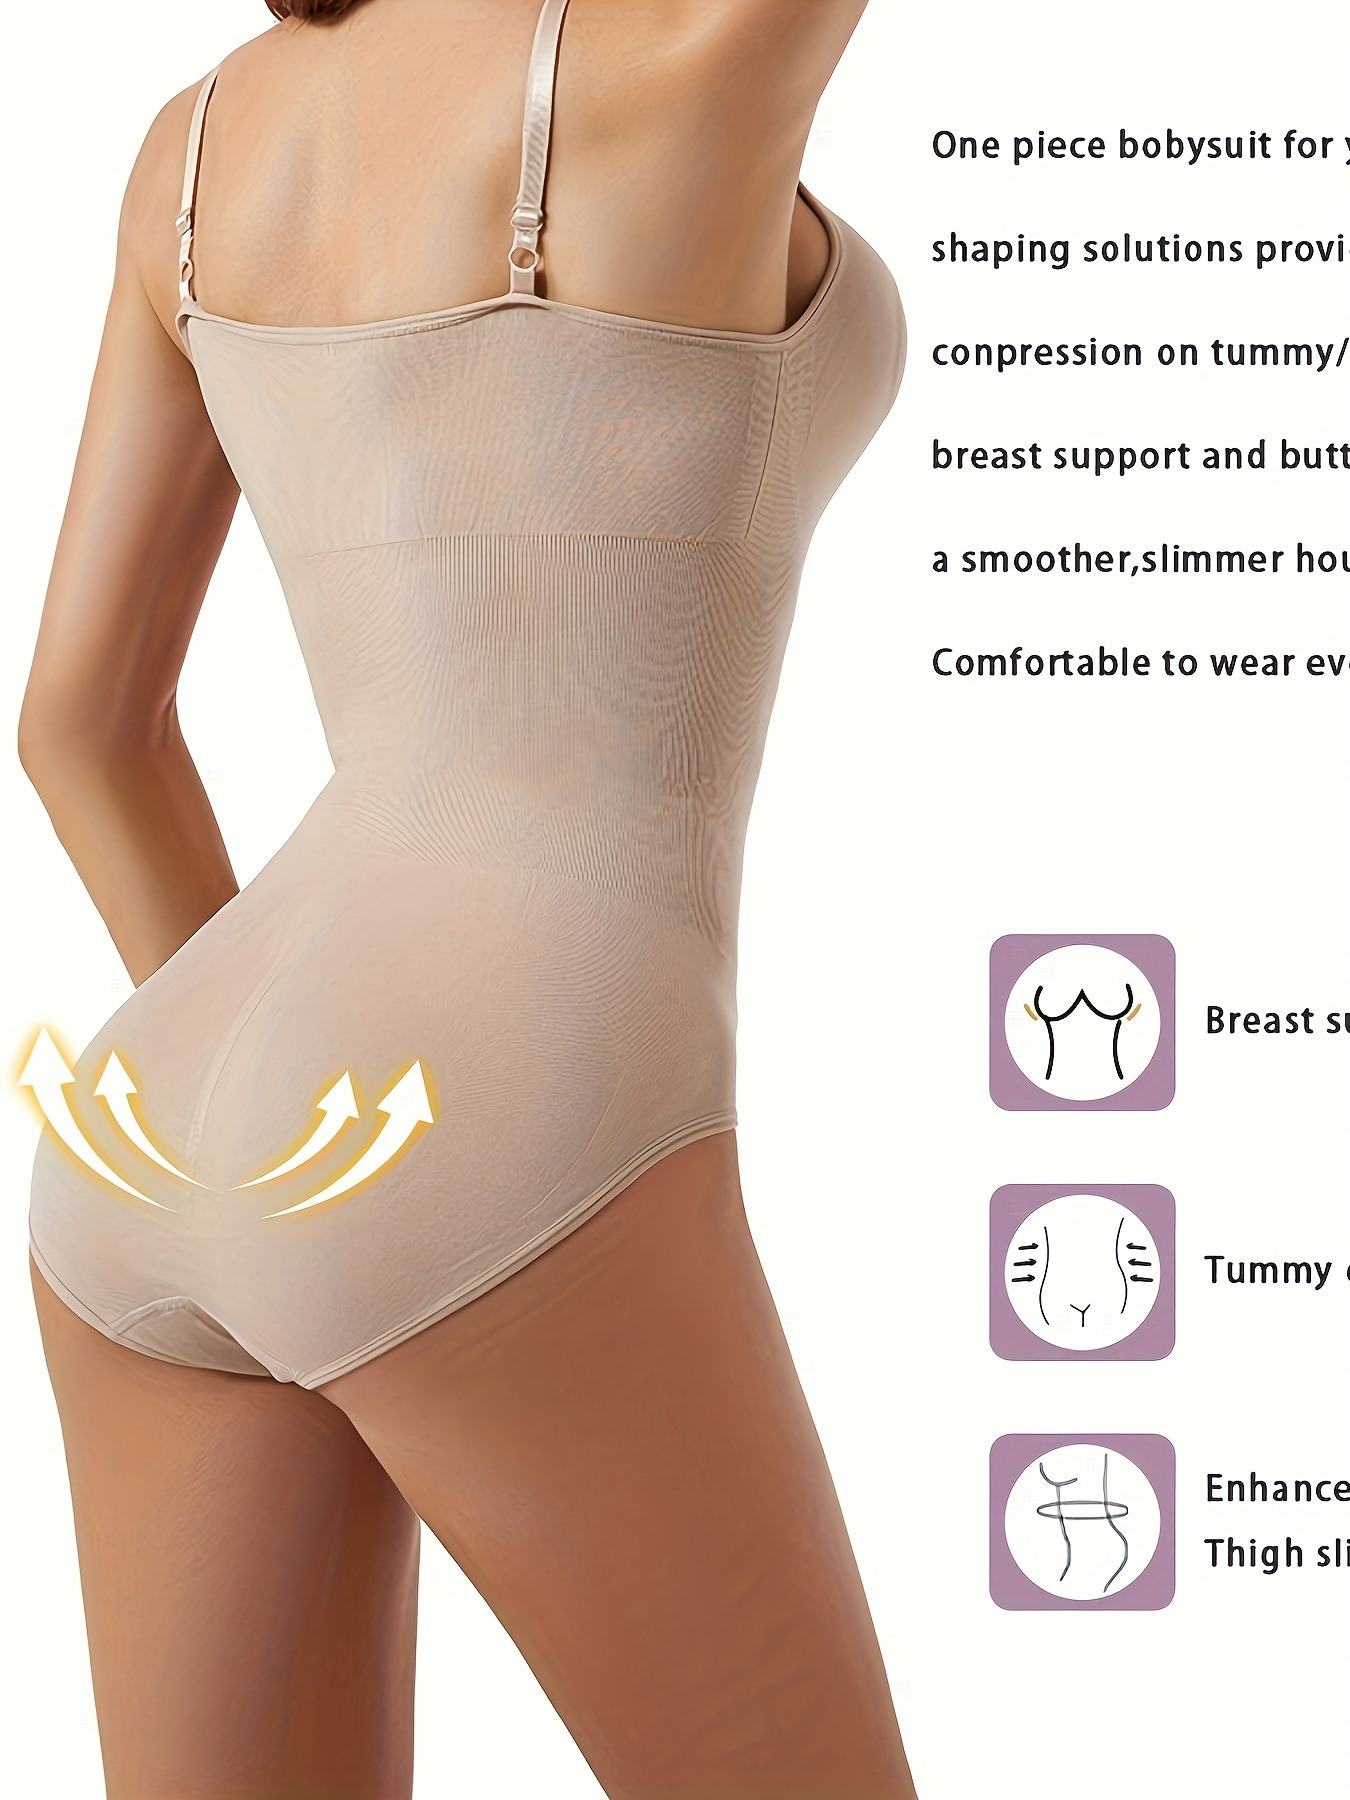 Bolayu Stretchy Beauty Basic Bodysuit Slim Cross Cover Cellulite